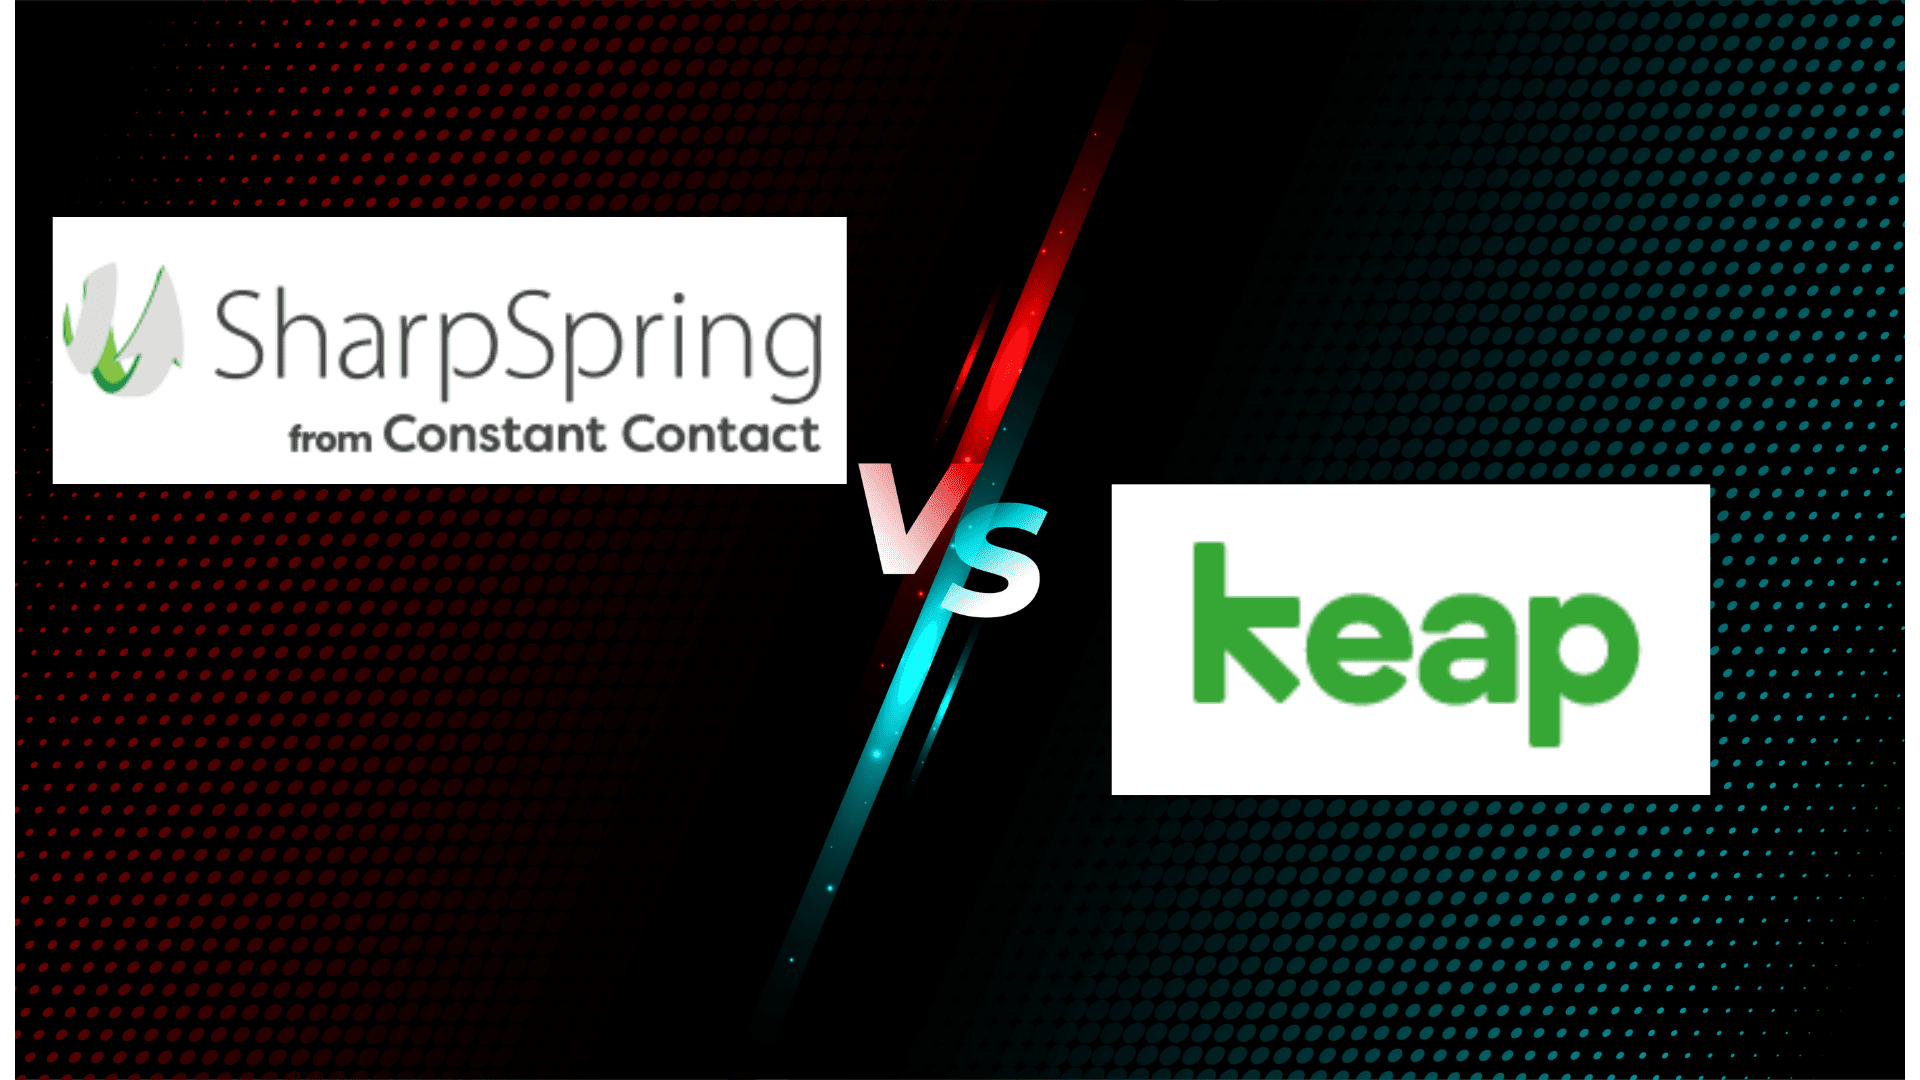 Sharpspring vs keap